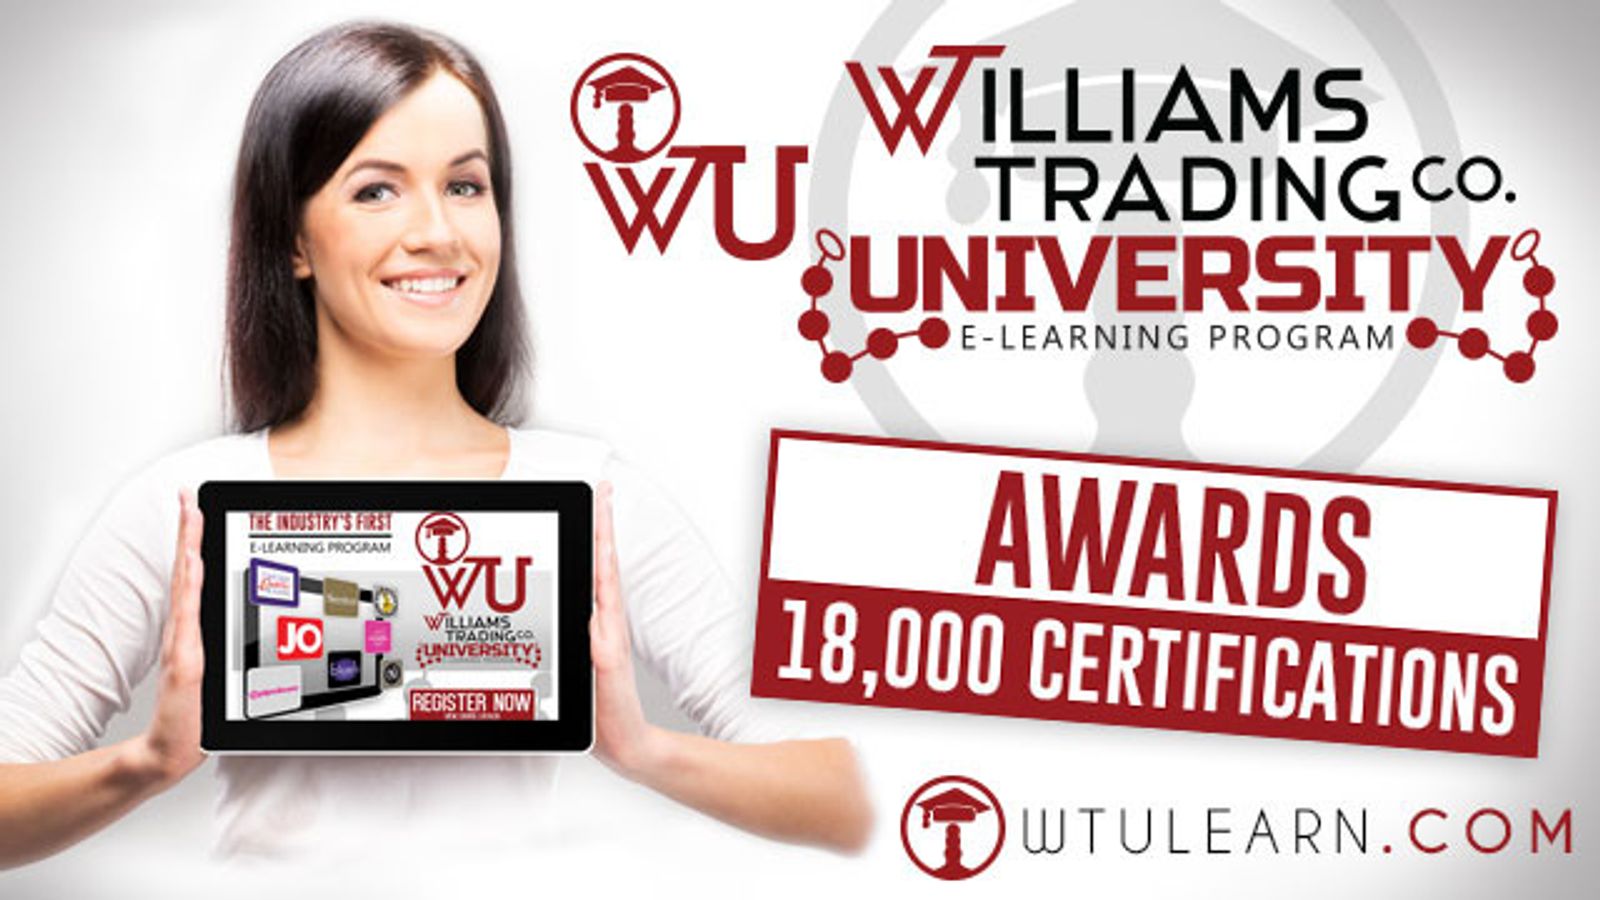 Williams Trading University Awards 18,000 Certifications